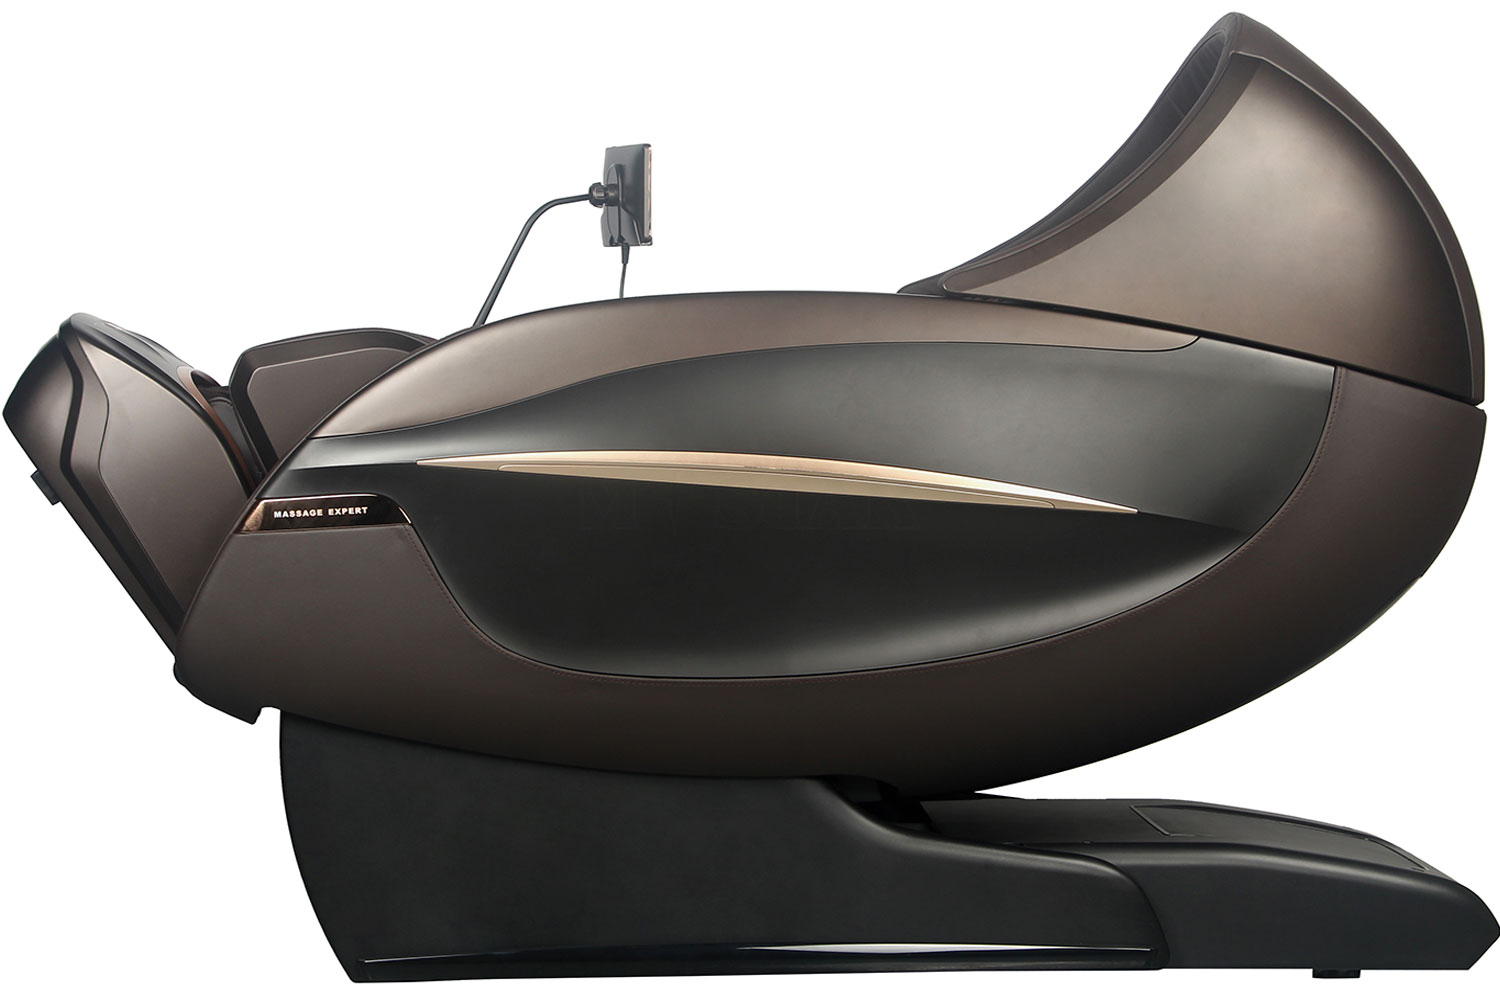 Best Full Body Airbags 4D Massage Chair Recliner